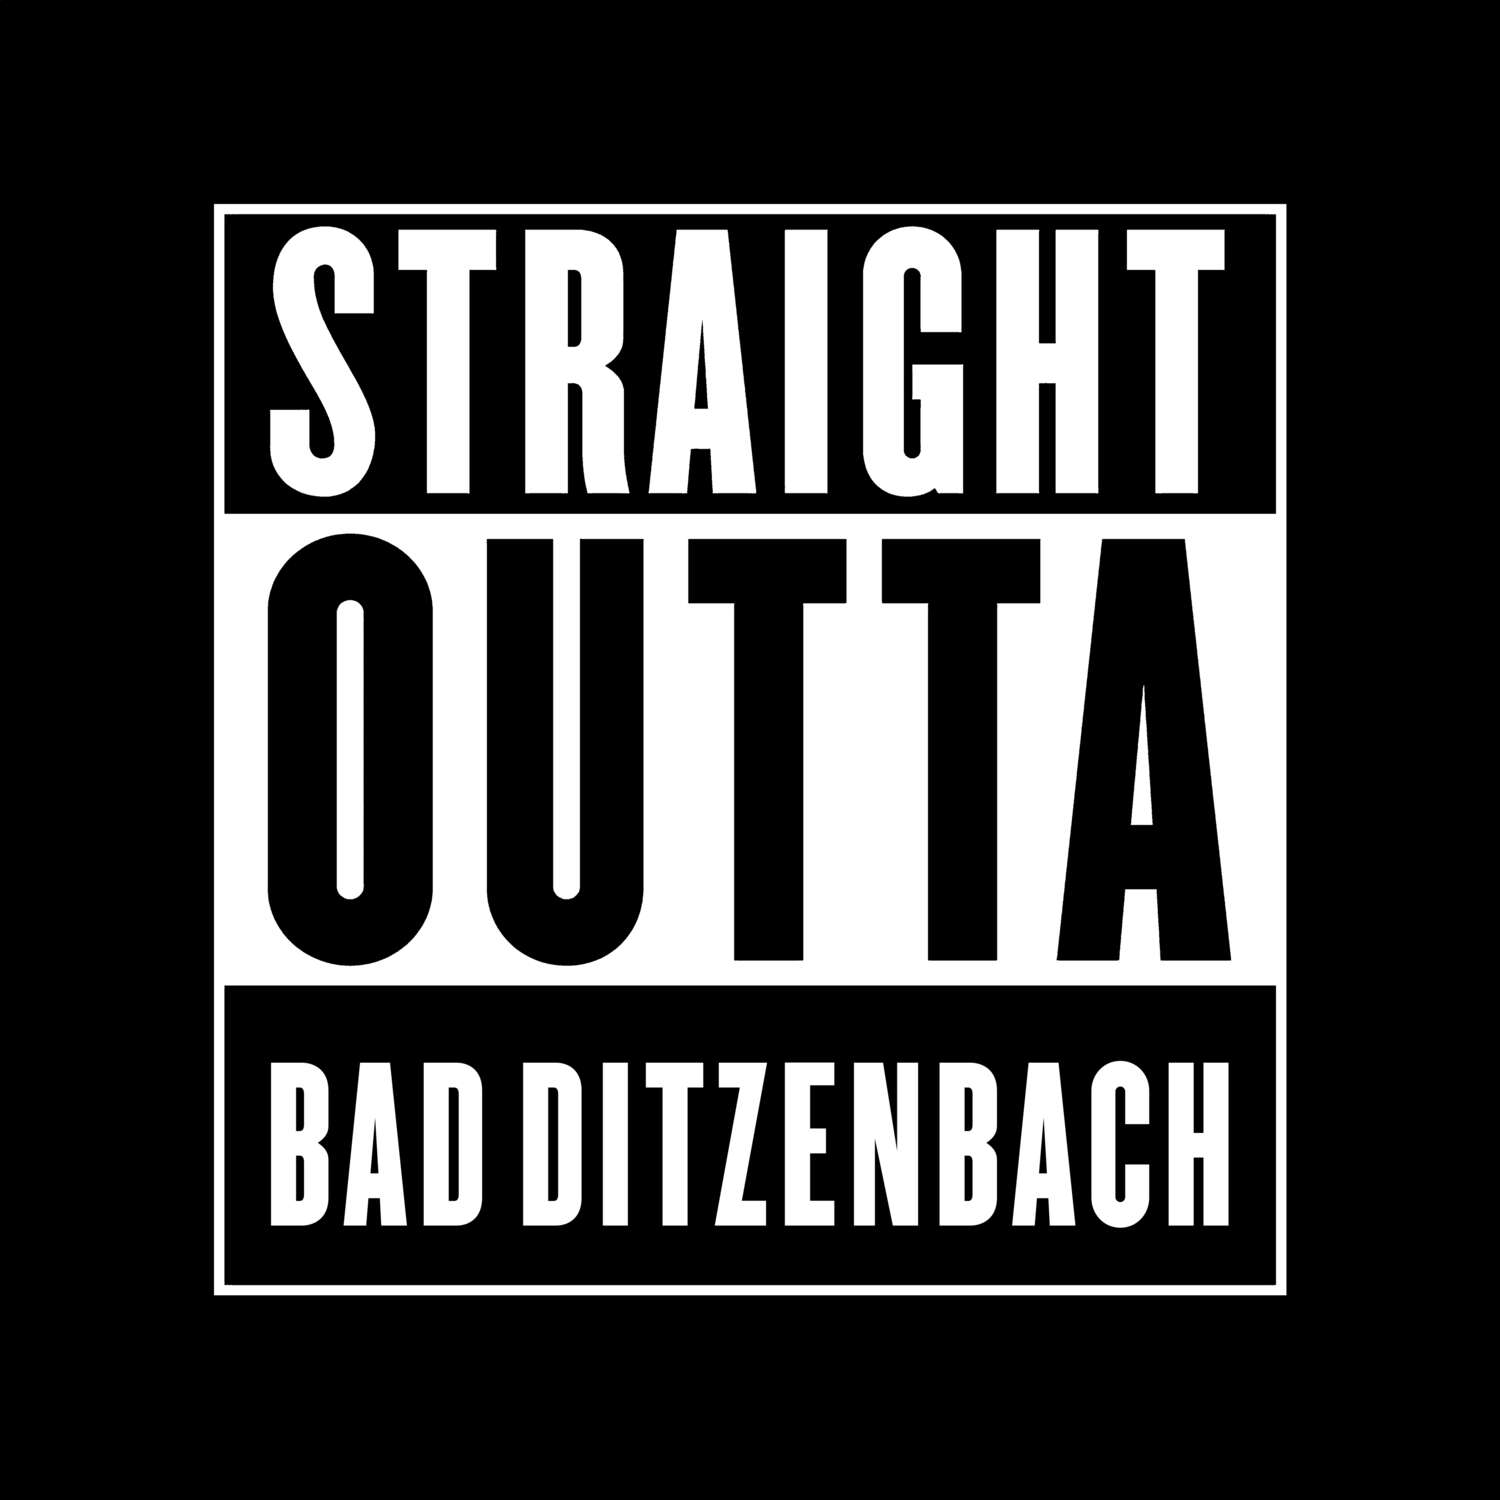 Bad Ditzenbach T-Shirt »Straight Outta«